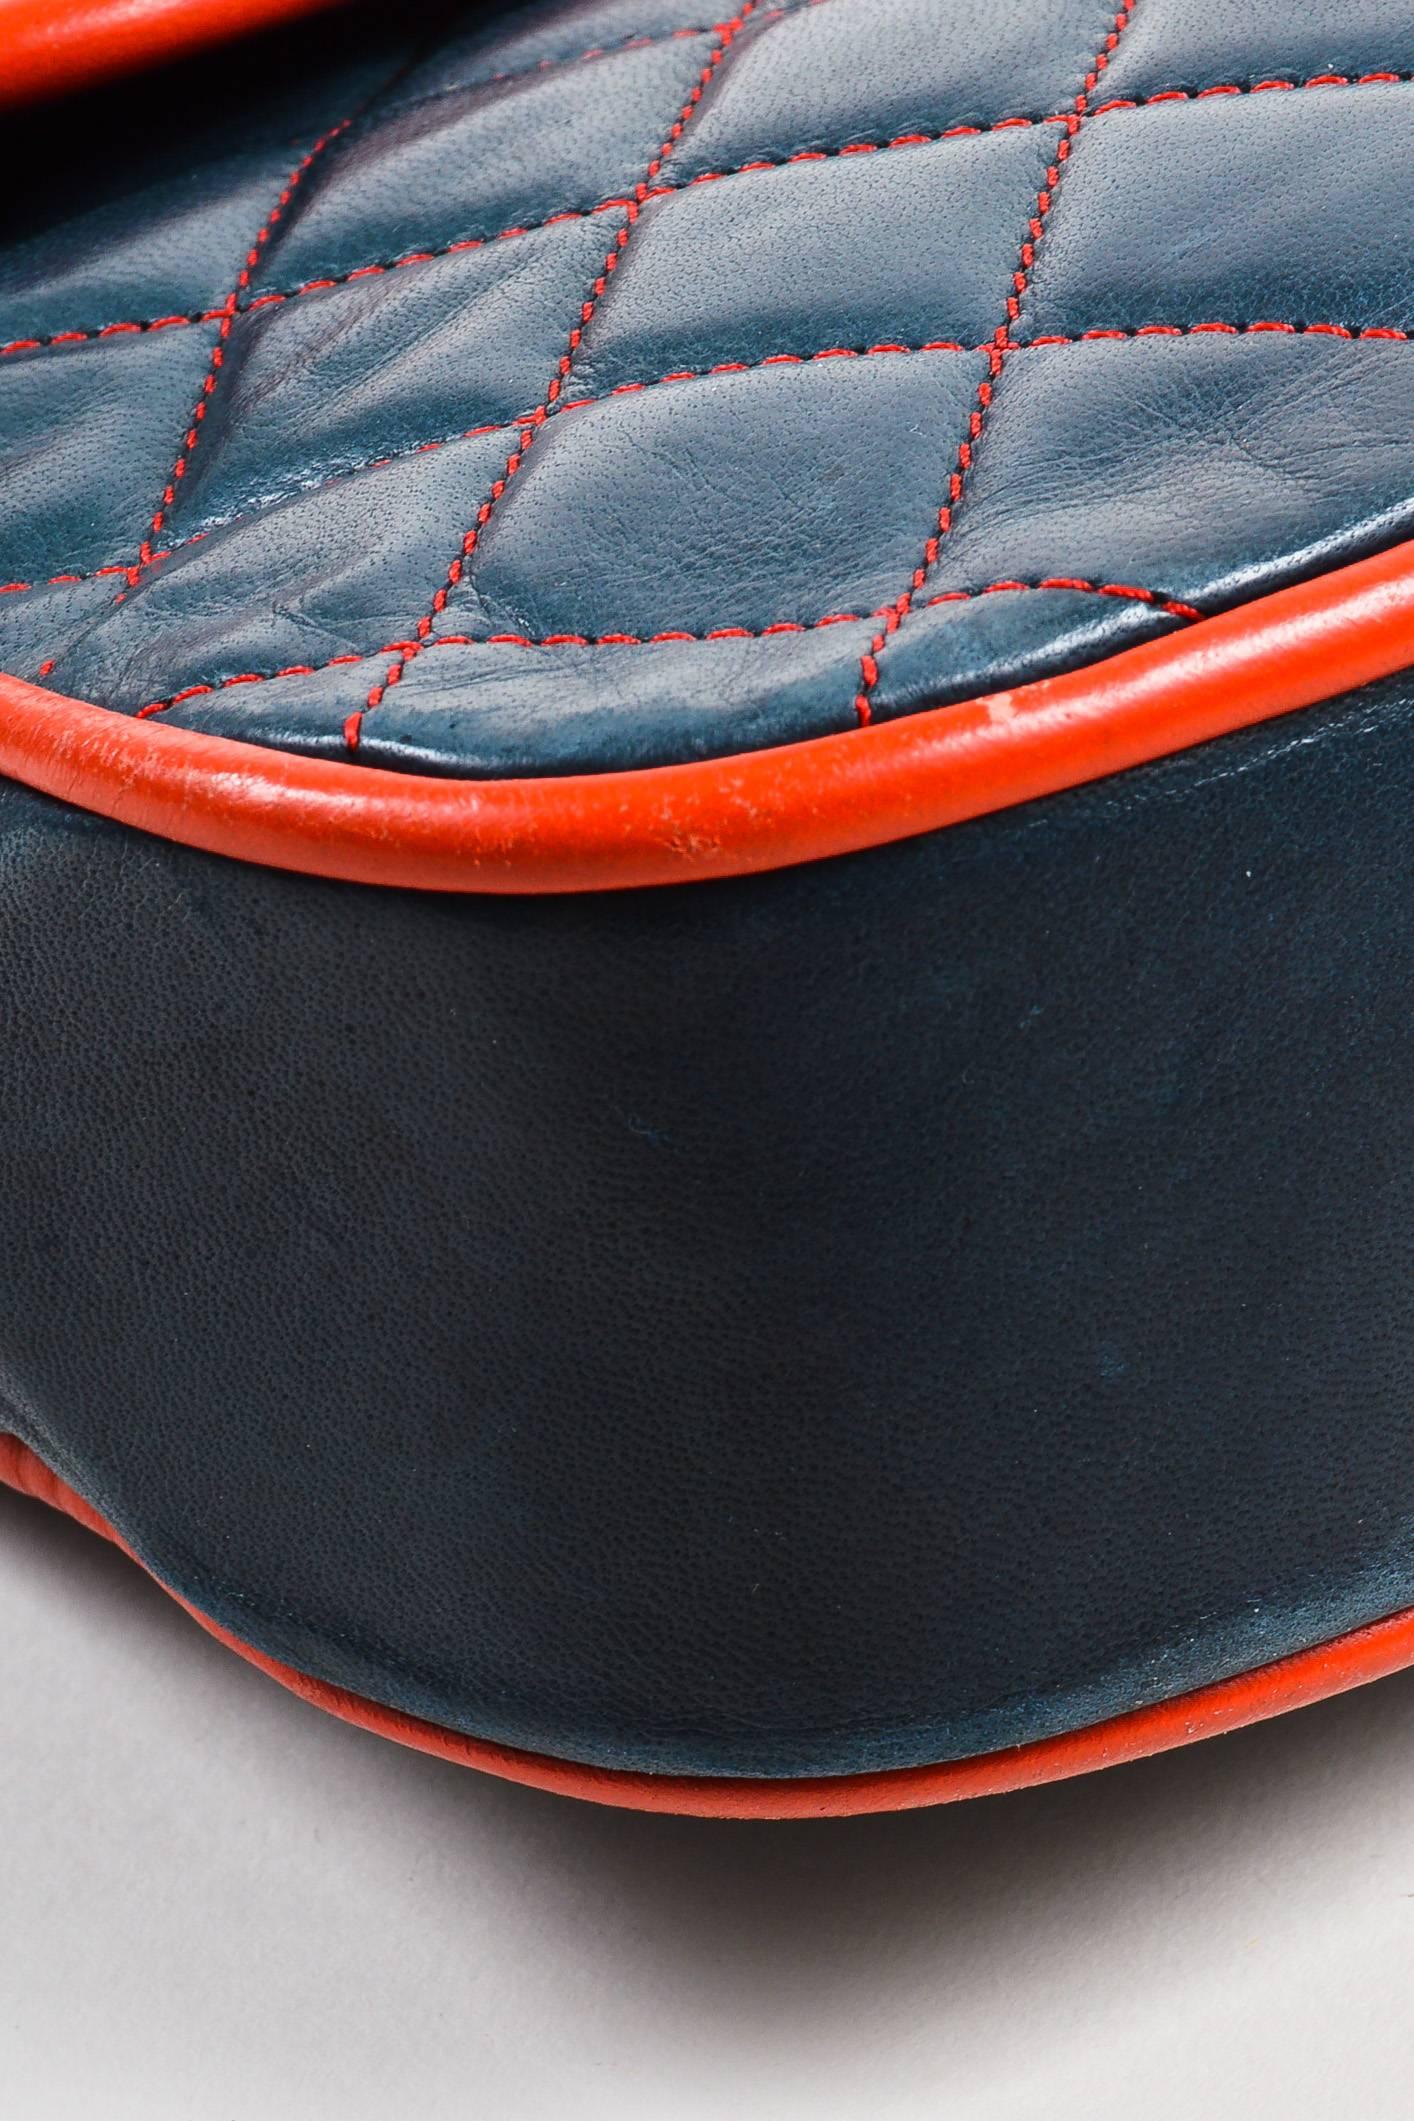 Women's Vintage Saint Laurent Navy Red Leather Quilted Flap Top Shoulder Bag